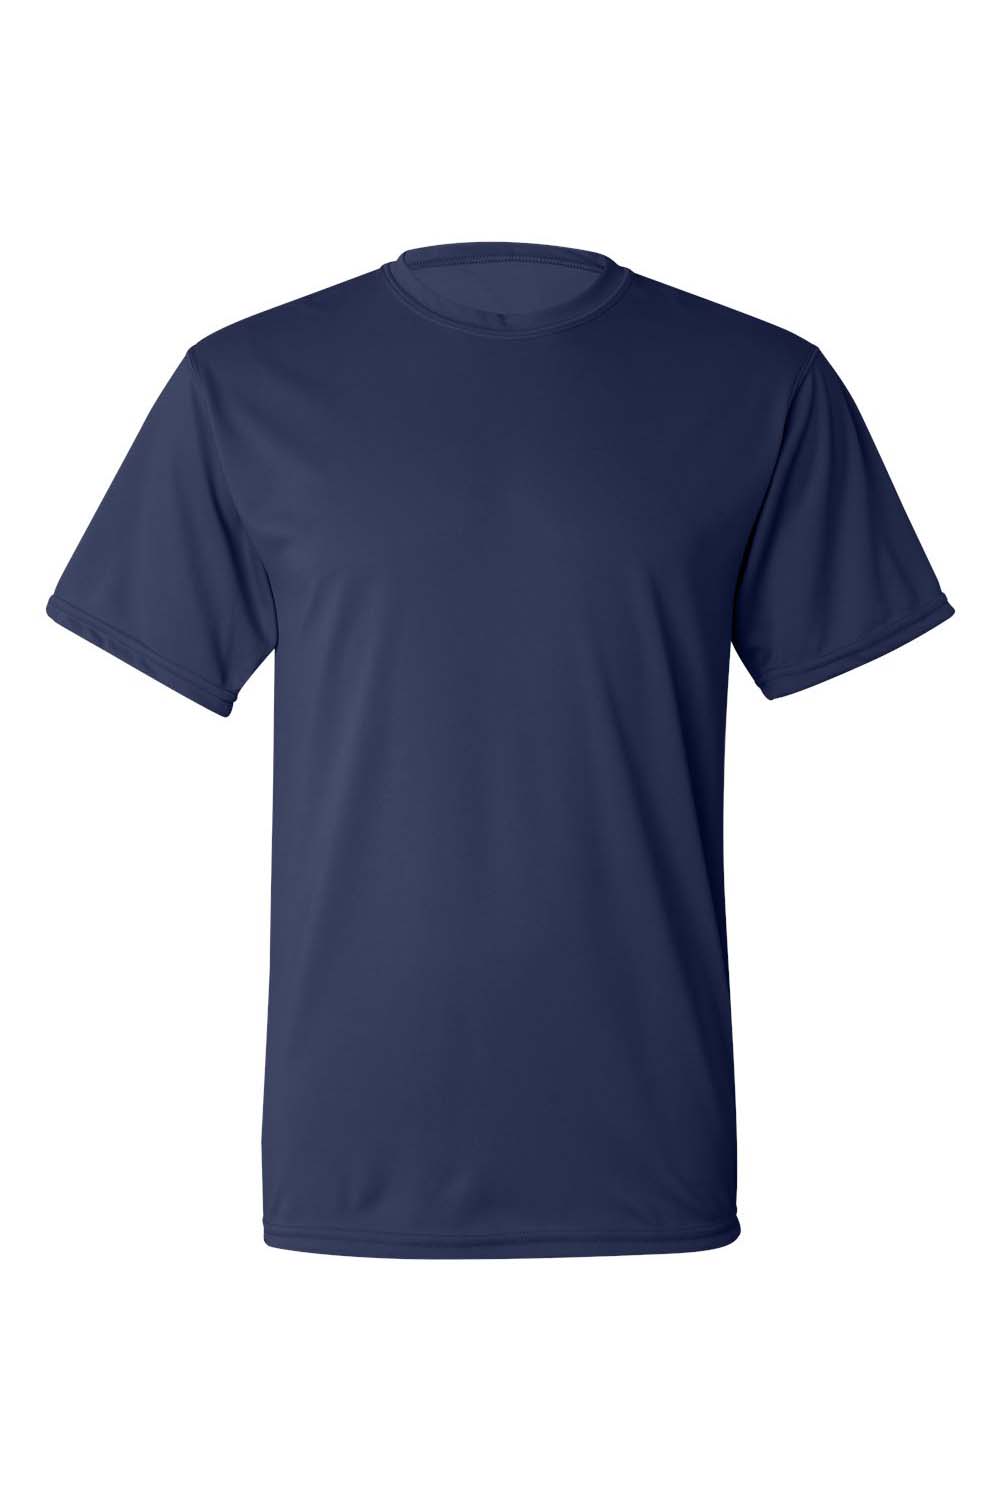 Augusta Sportswear 790 Mens Moisture Wicking Short Sleeve Crewneck T-Shirt Navy Blue Model Flat Front